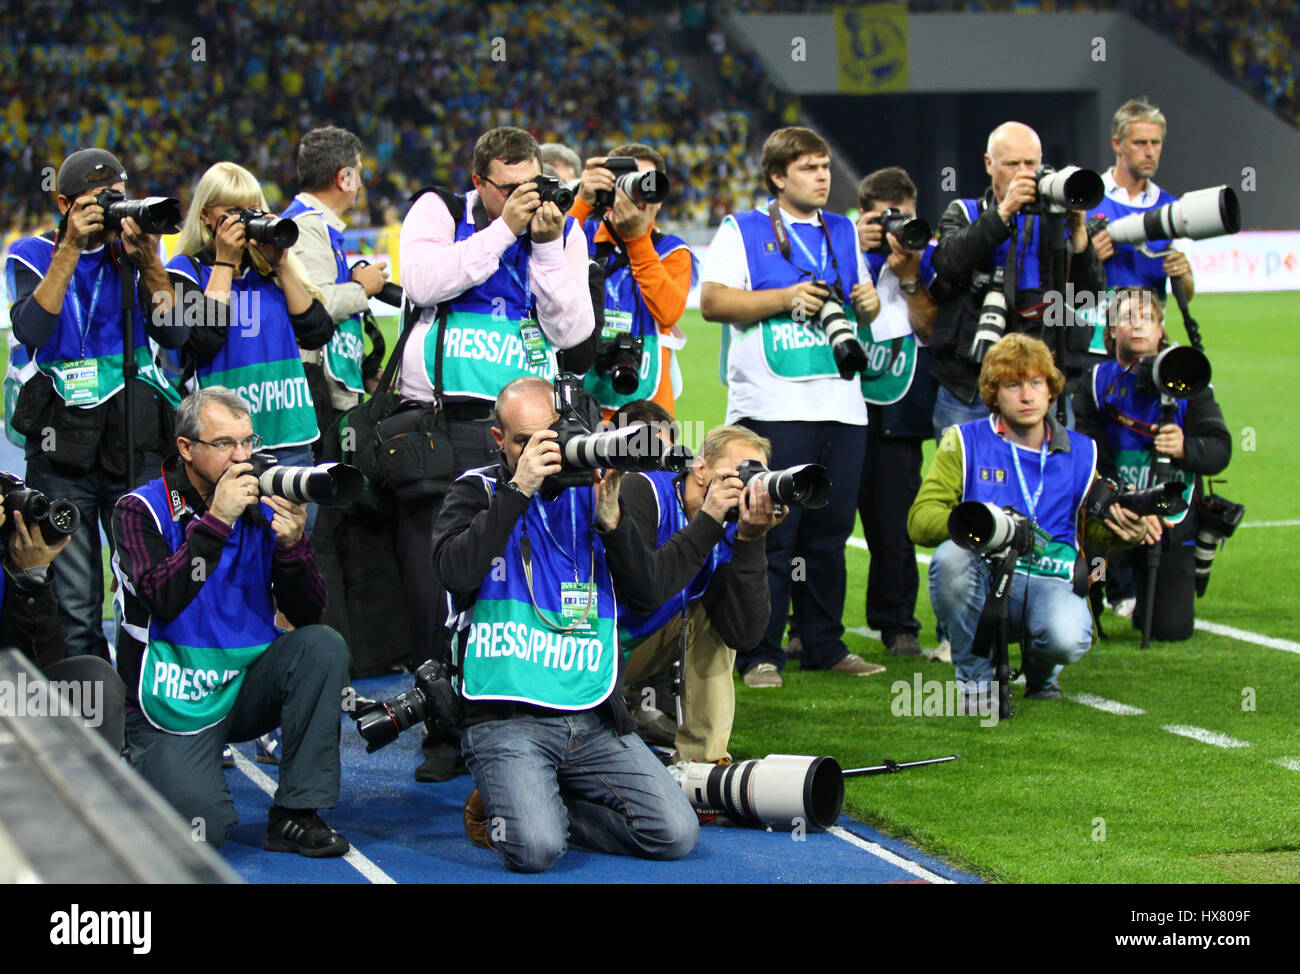 KYIV, UKRAINE - SEPTEMBER 10, 2013: Crowd of sports photographers before FIFA World Cup 2014 qualifier game Ukraine vs England at NSC Olympic stadium  Stock Photo